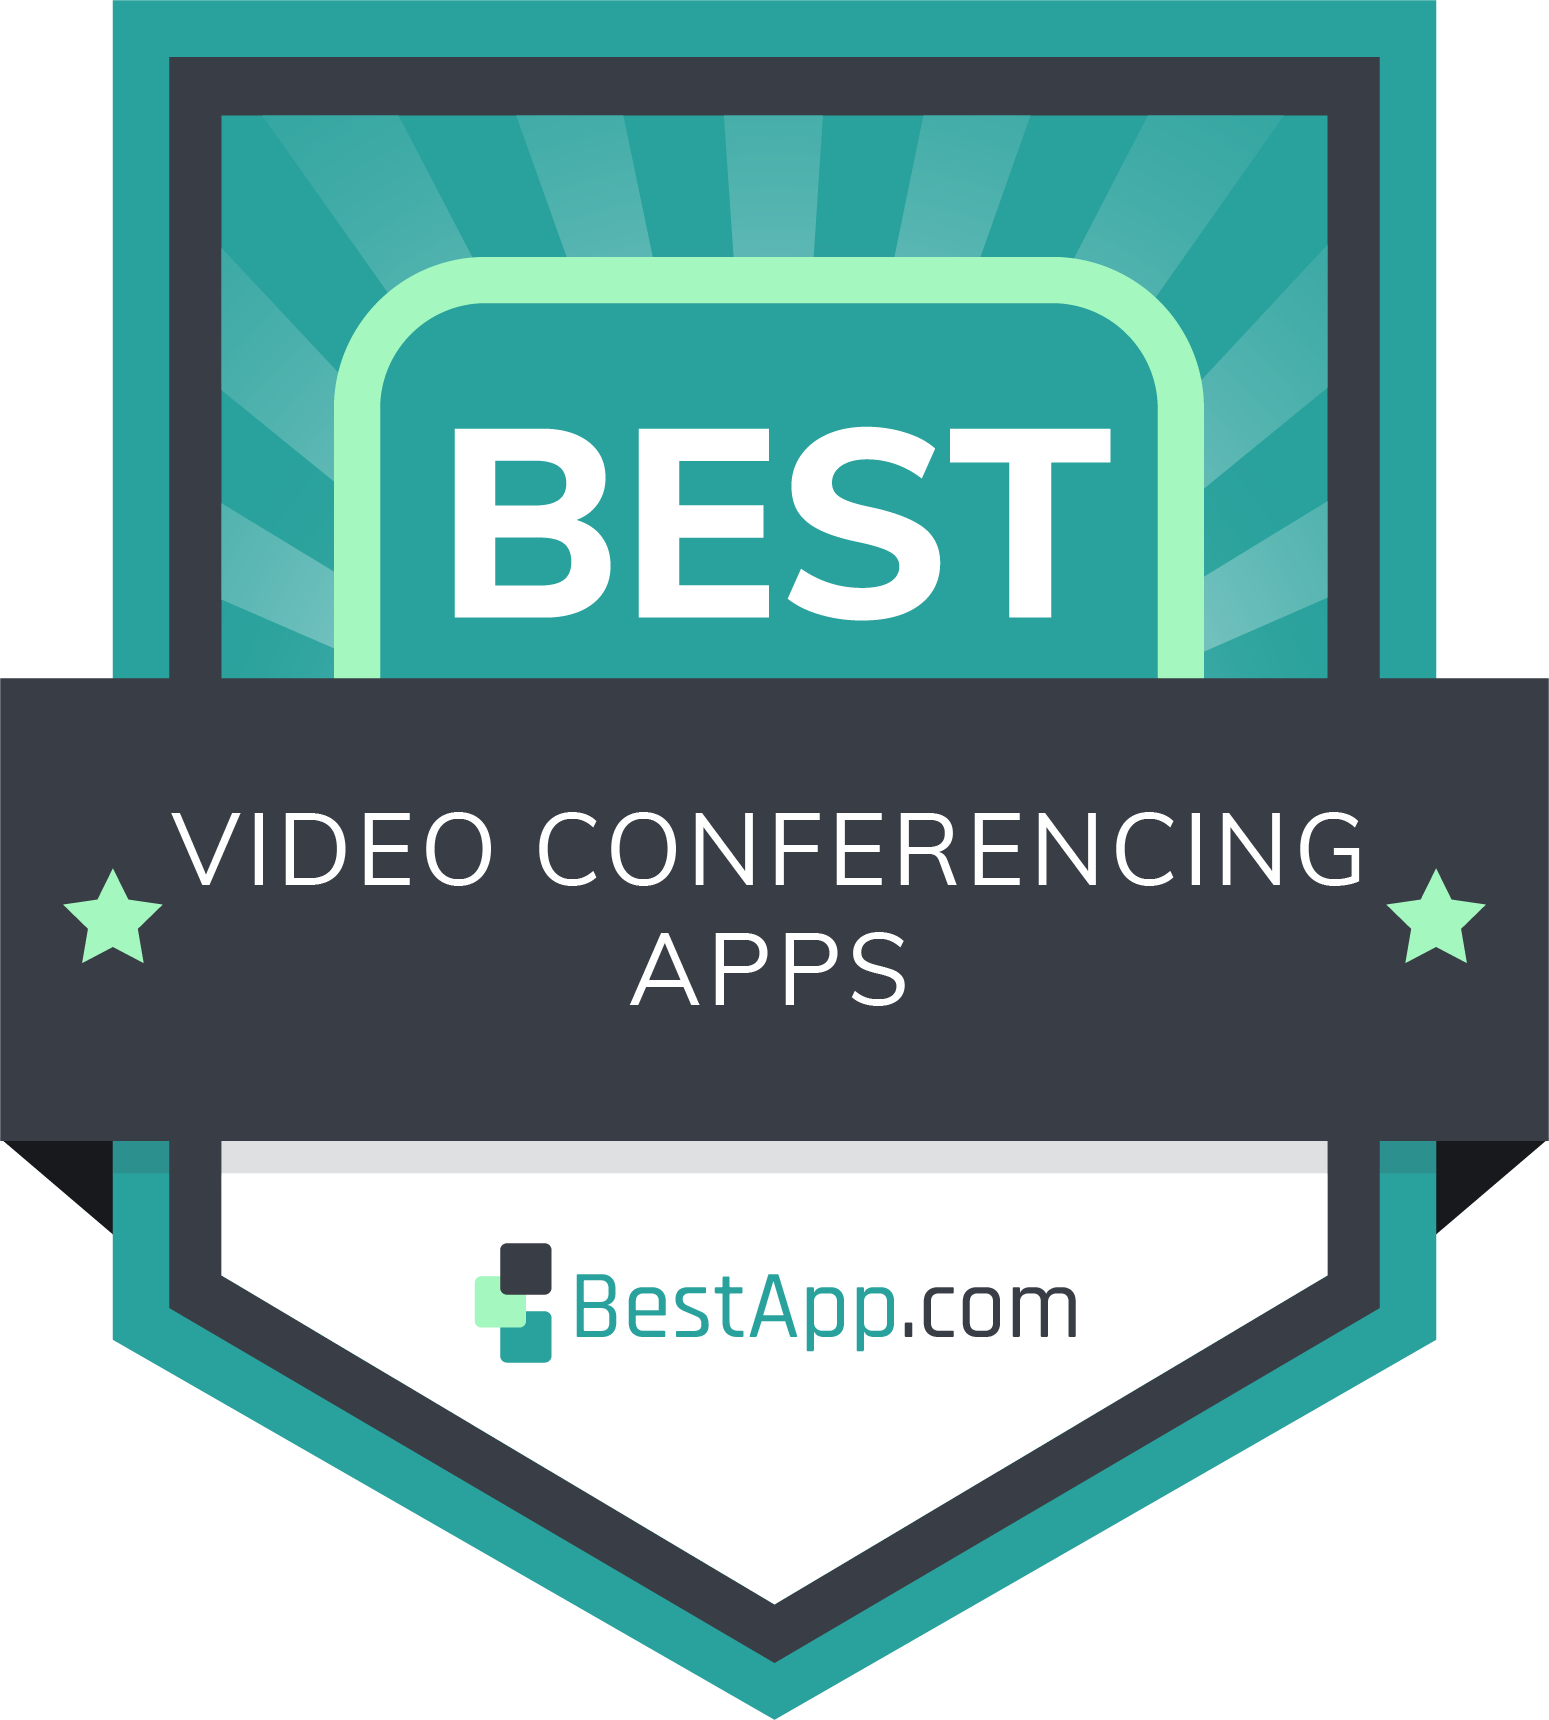 Best Video Conferencing Apps Badge